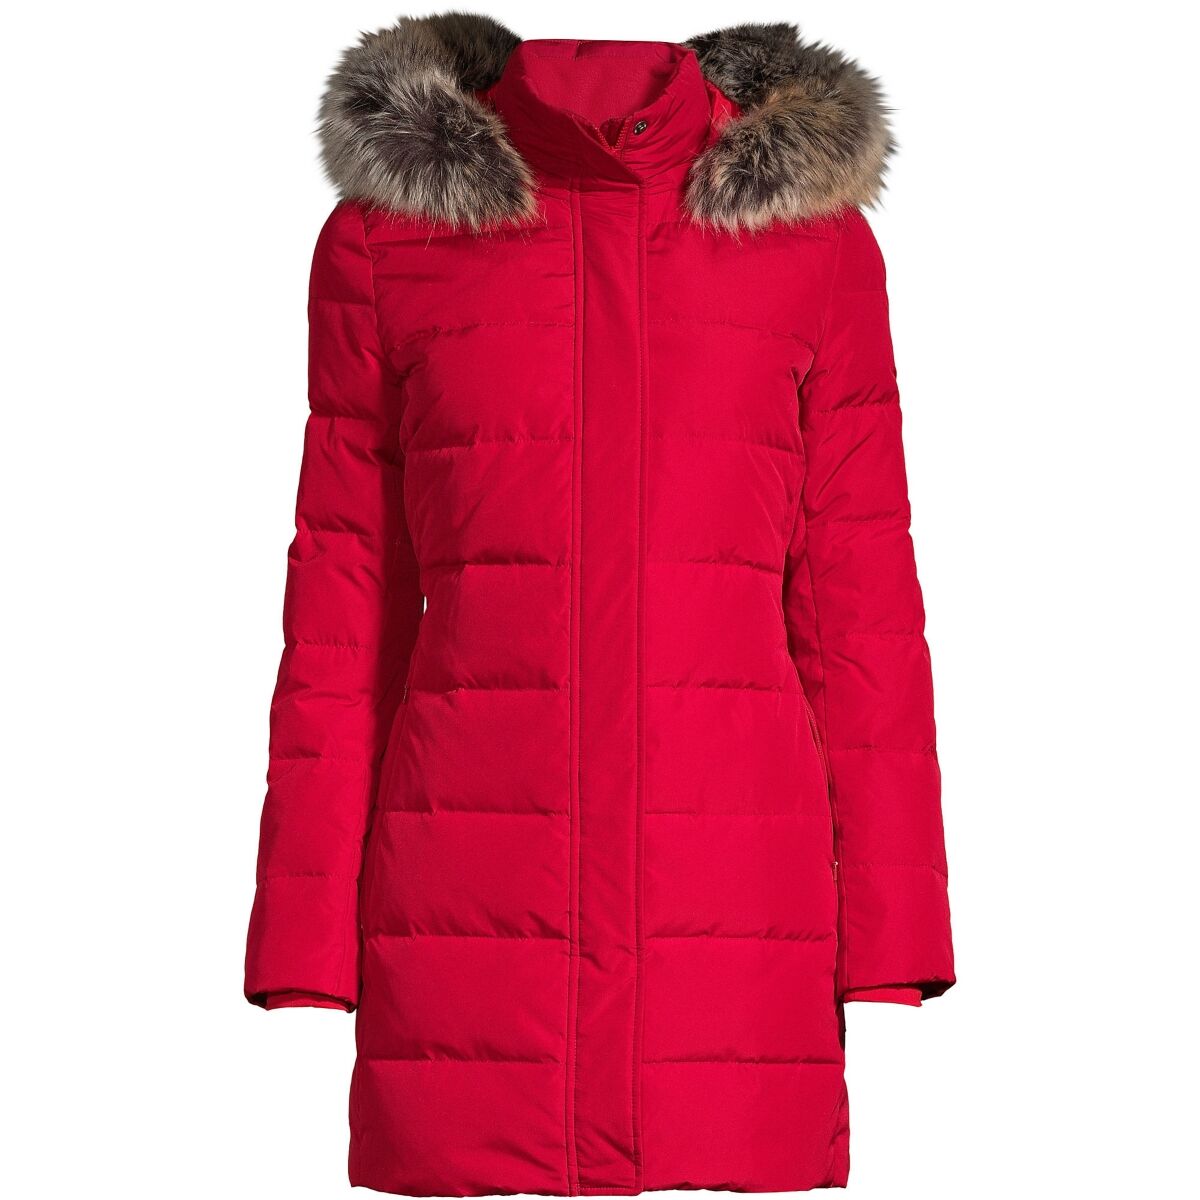 Lands' End Women's Down Winter Coat - Rich red